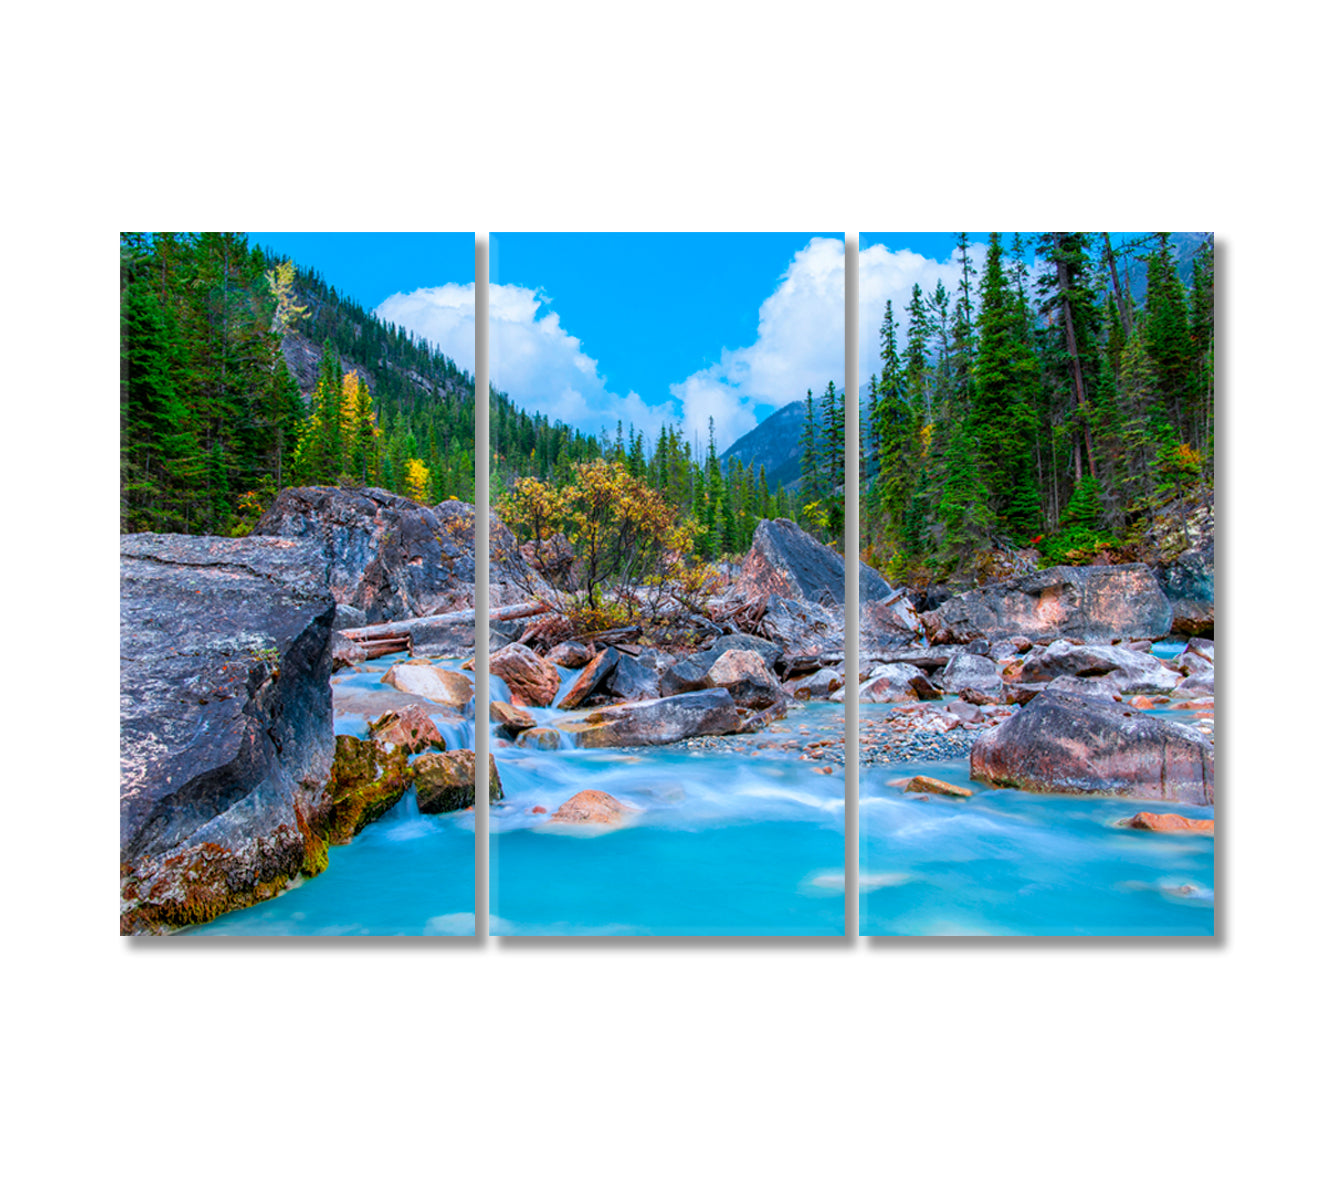 Kicking Horse River Waterfalls Banff Alberta Canada Canvas Print-Canvas Print-CetArt-3 Panels-36x24 inches-CetArt